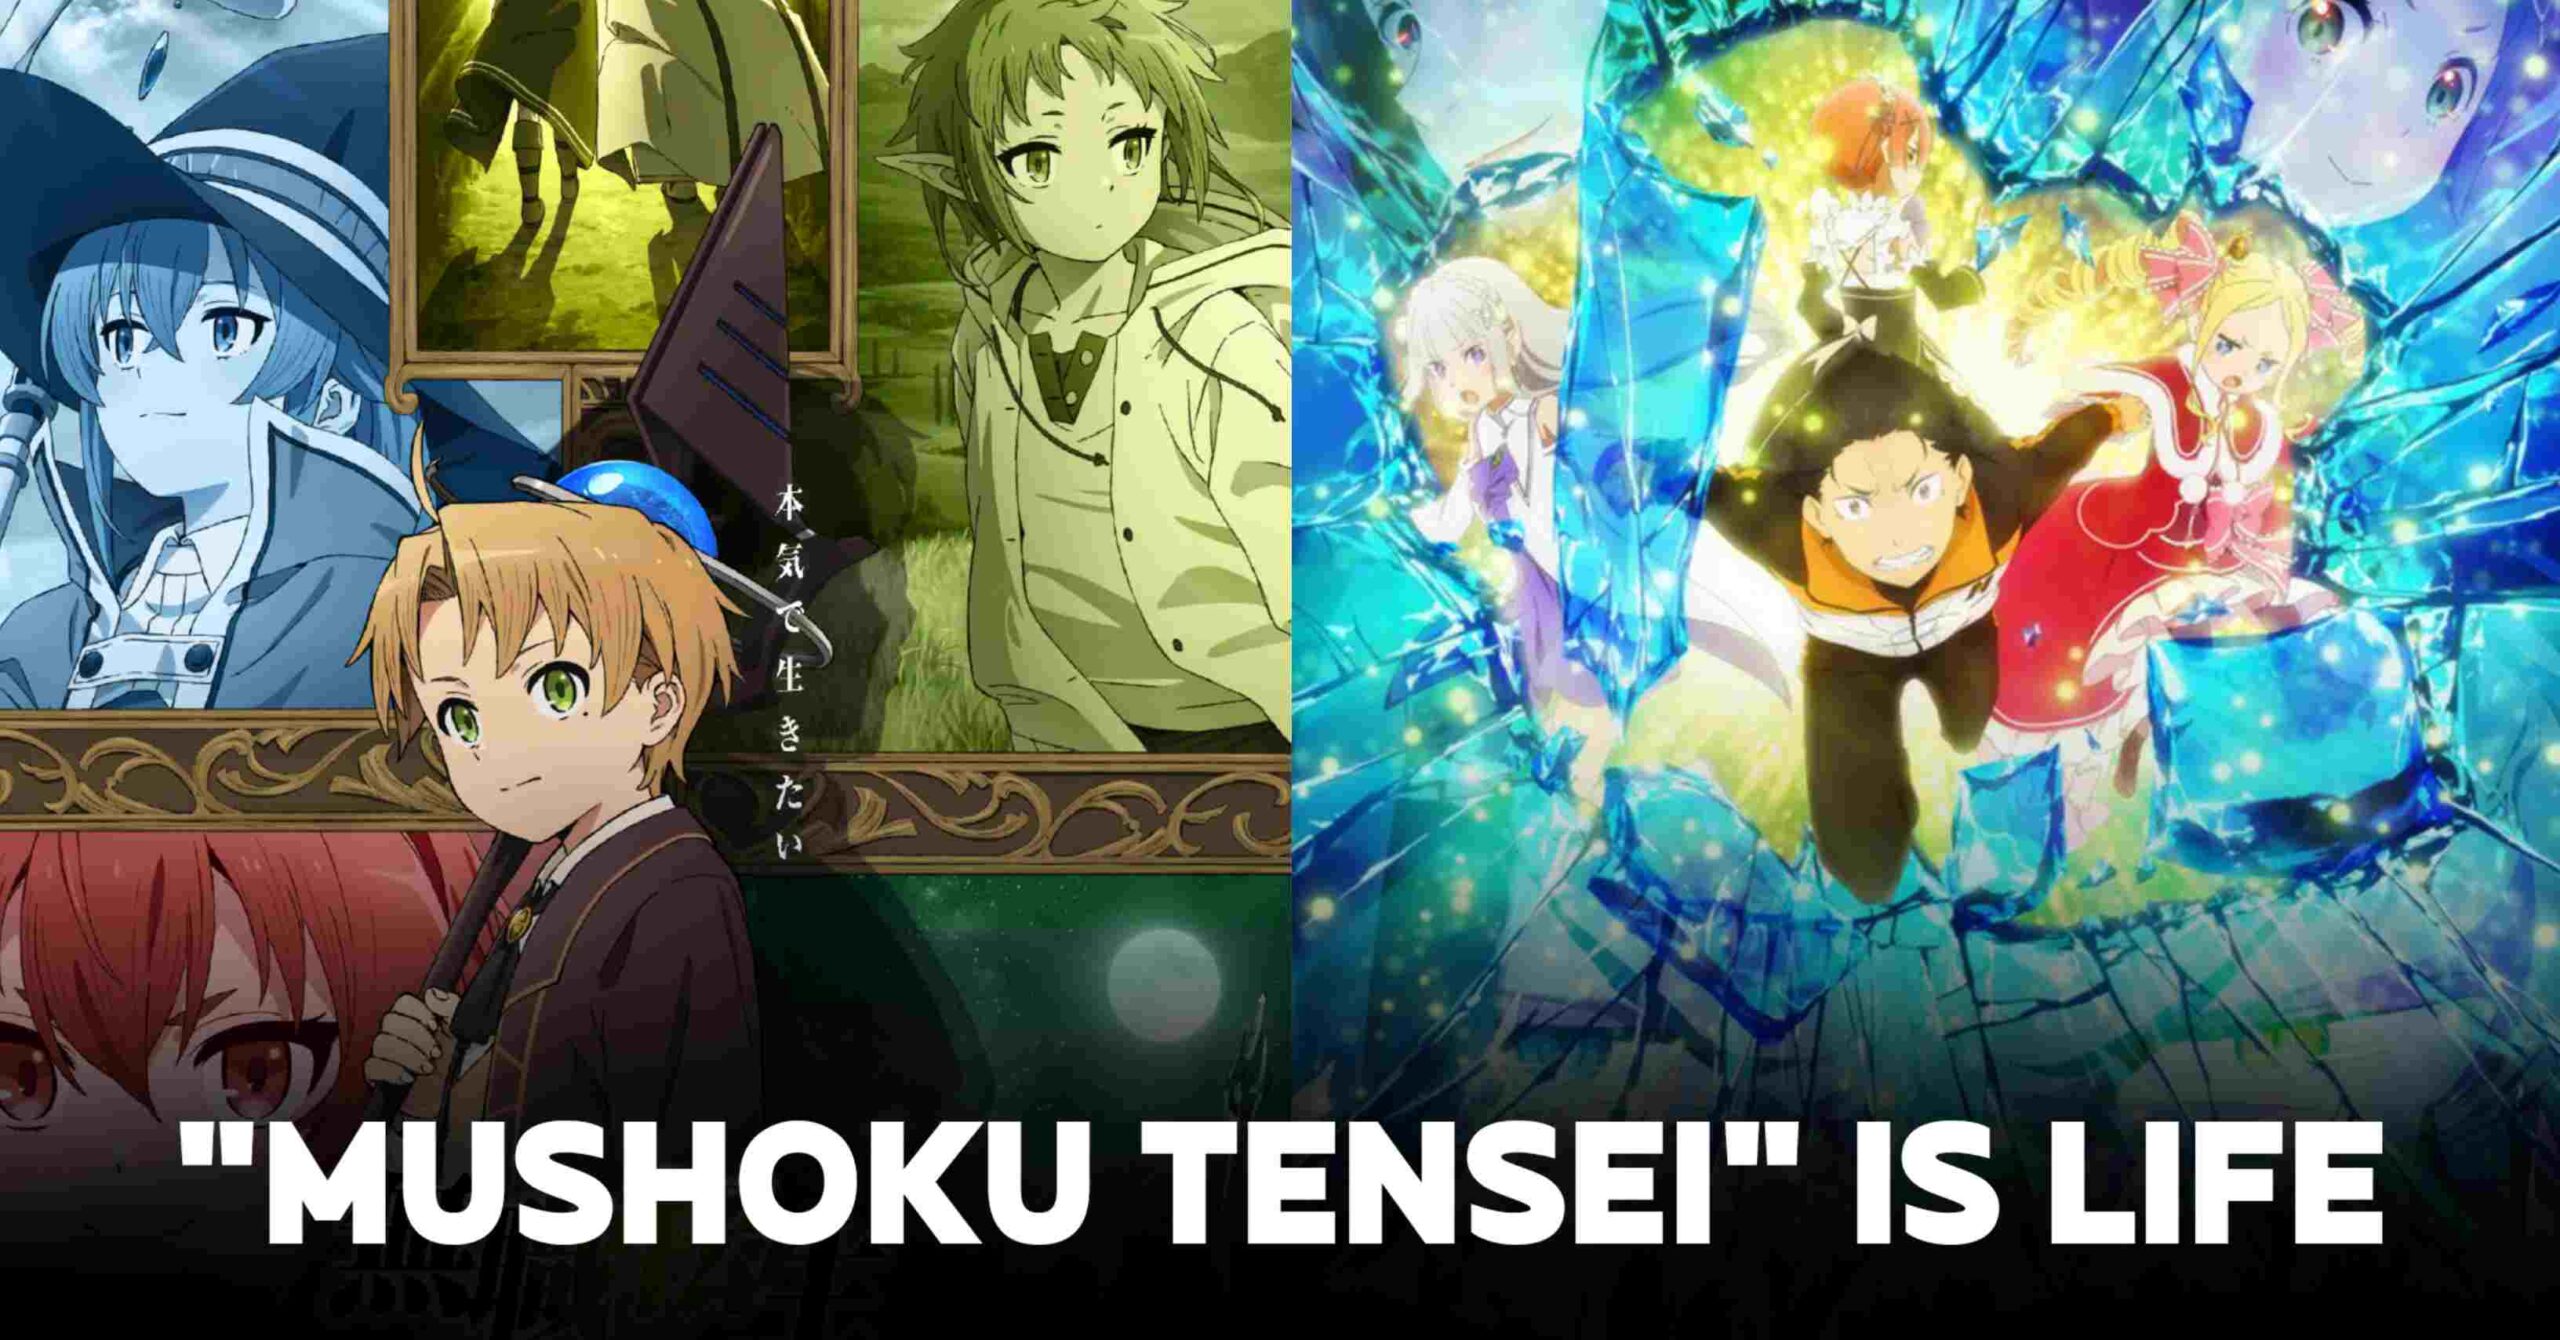 Re: Zero Author Praises Mushoku Tensei!